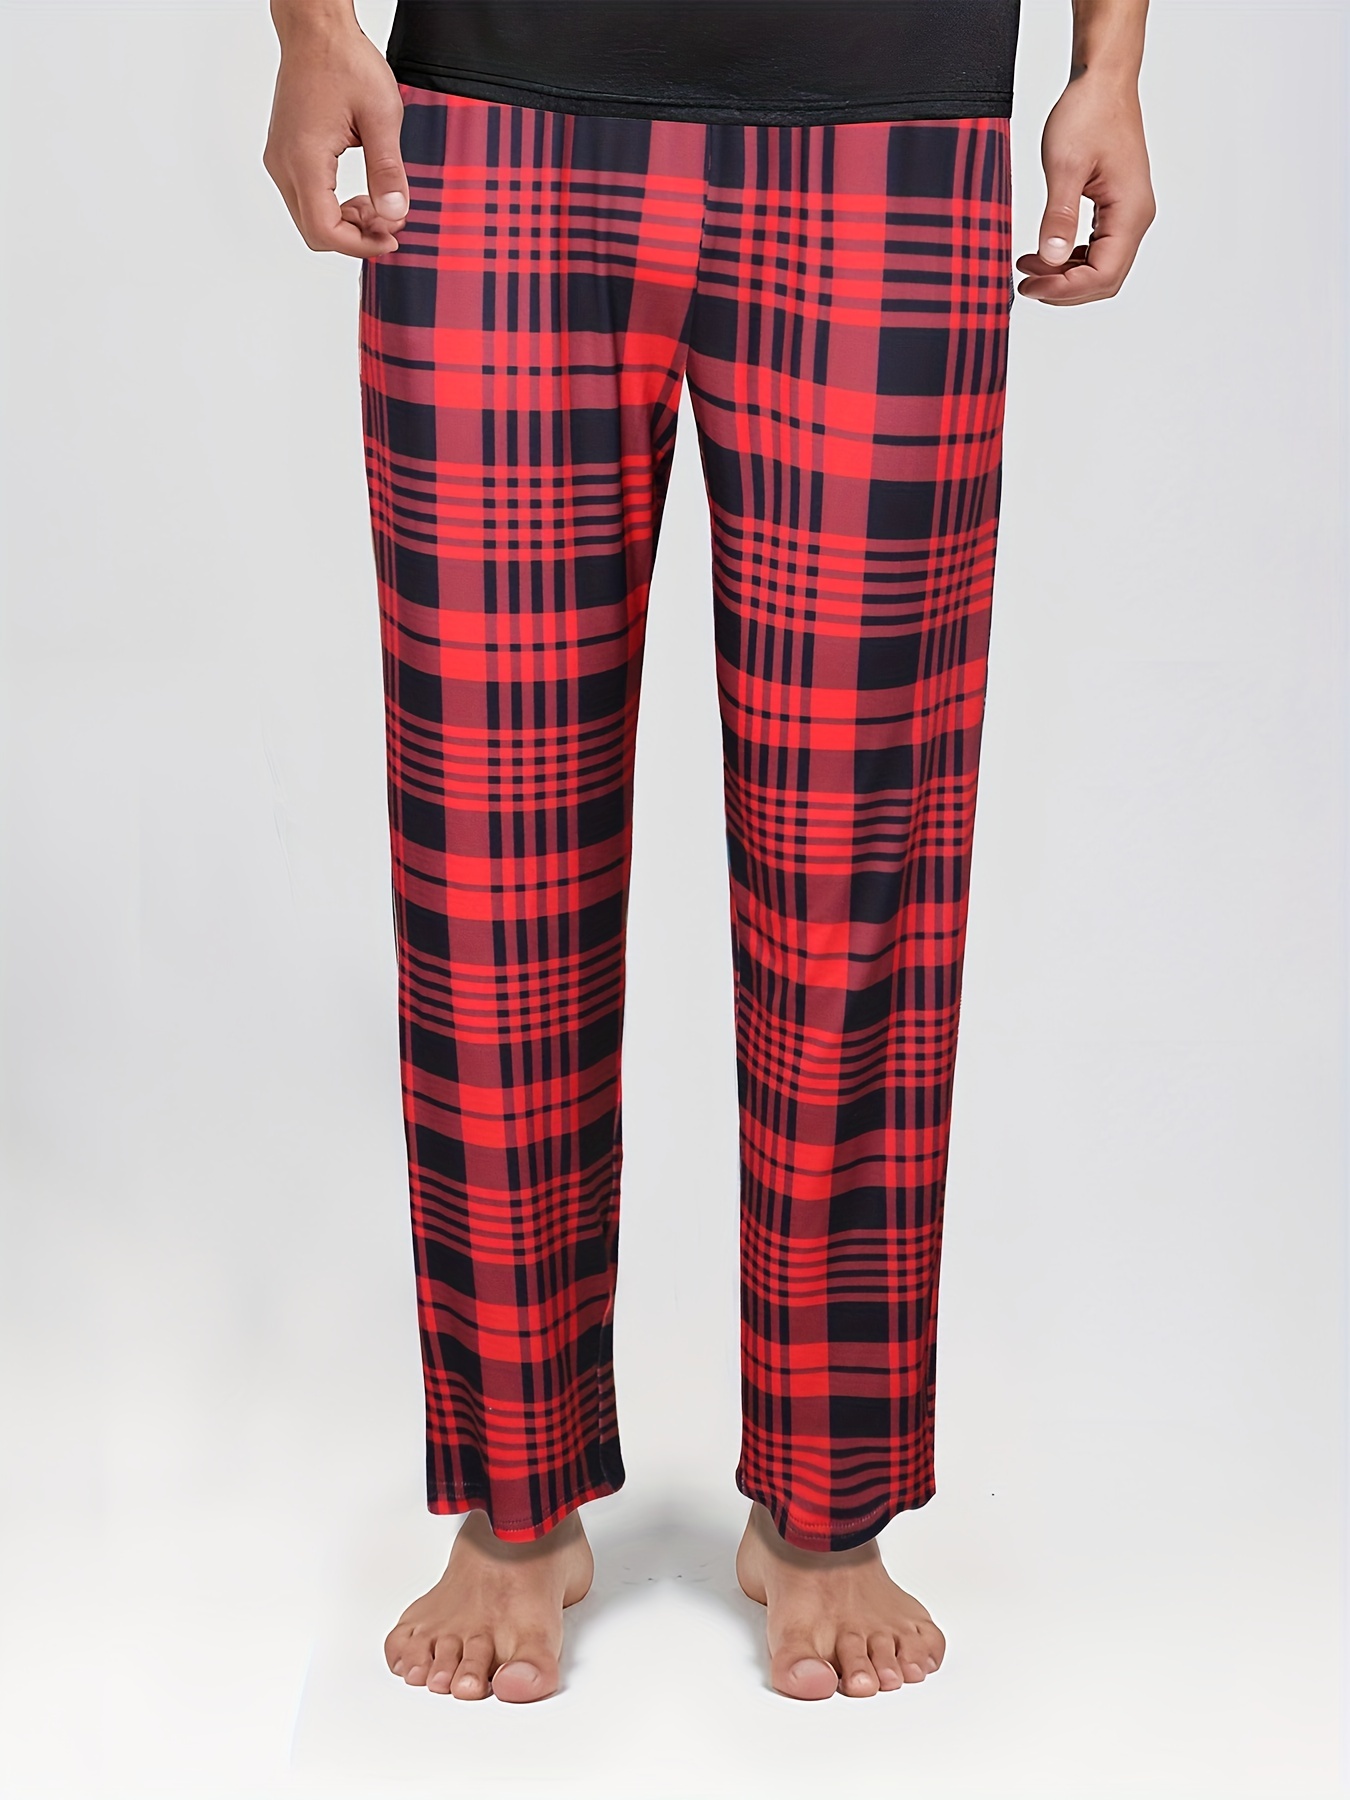 Women Plaid Pajama Pants Sleepwear Women Lounge Pants Comfy With Pockets